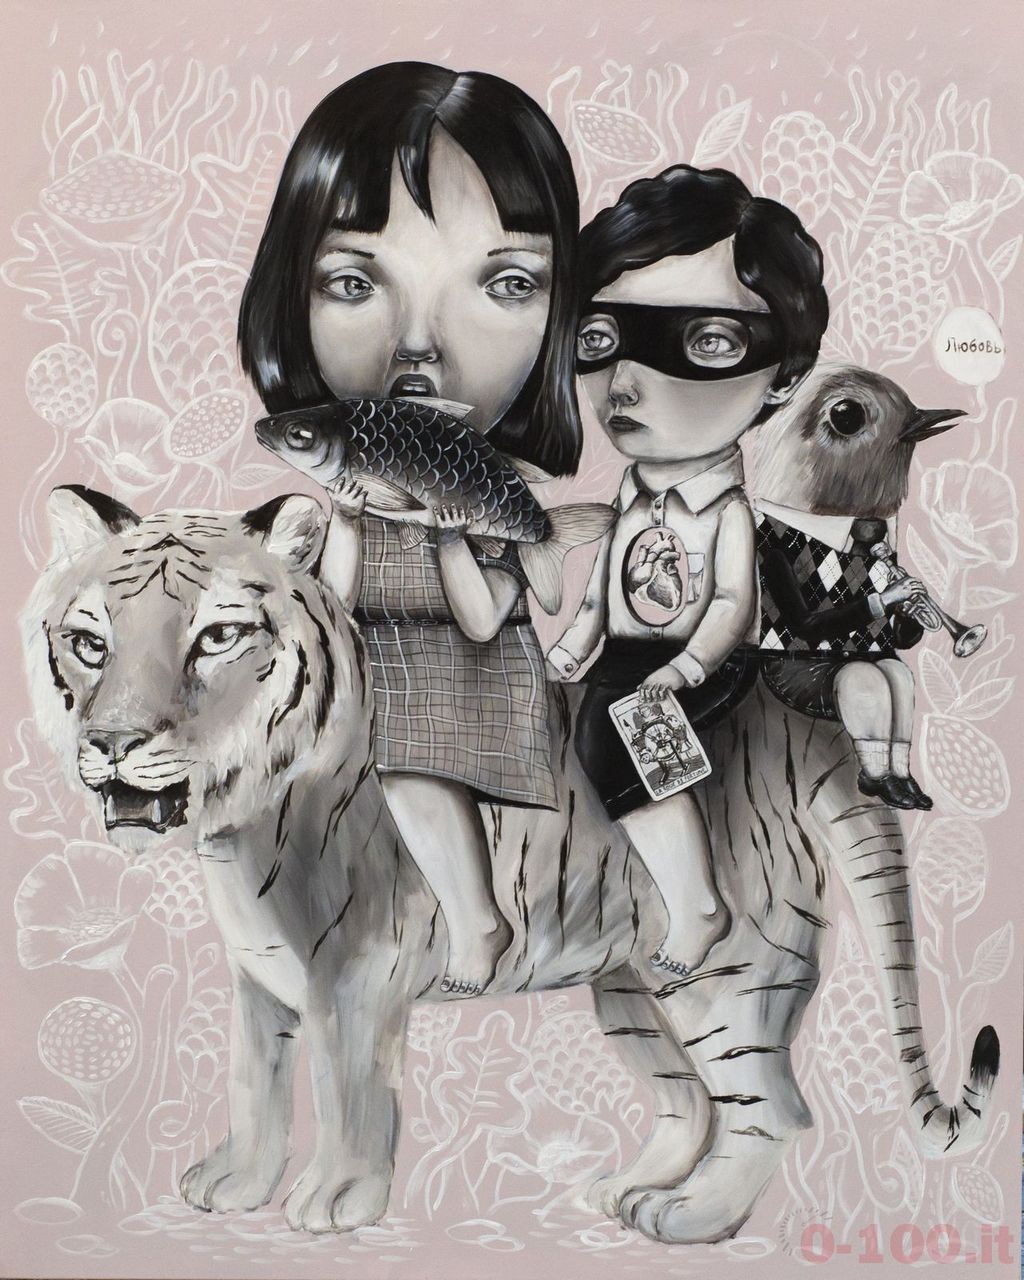 2015_Sabrina_Dan_The Third Tiger_acrylics on canvas_150x120_0-100